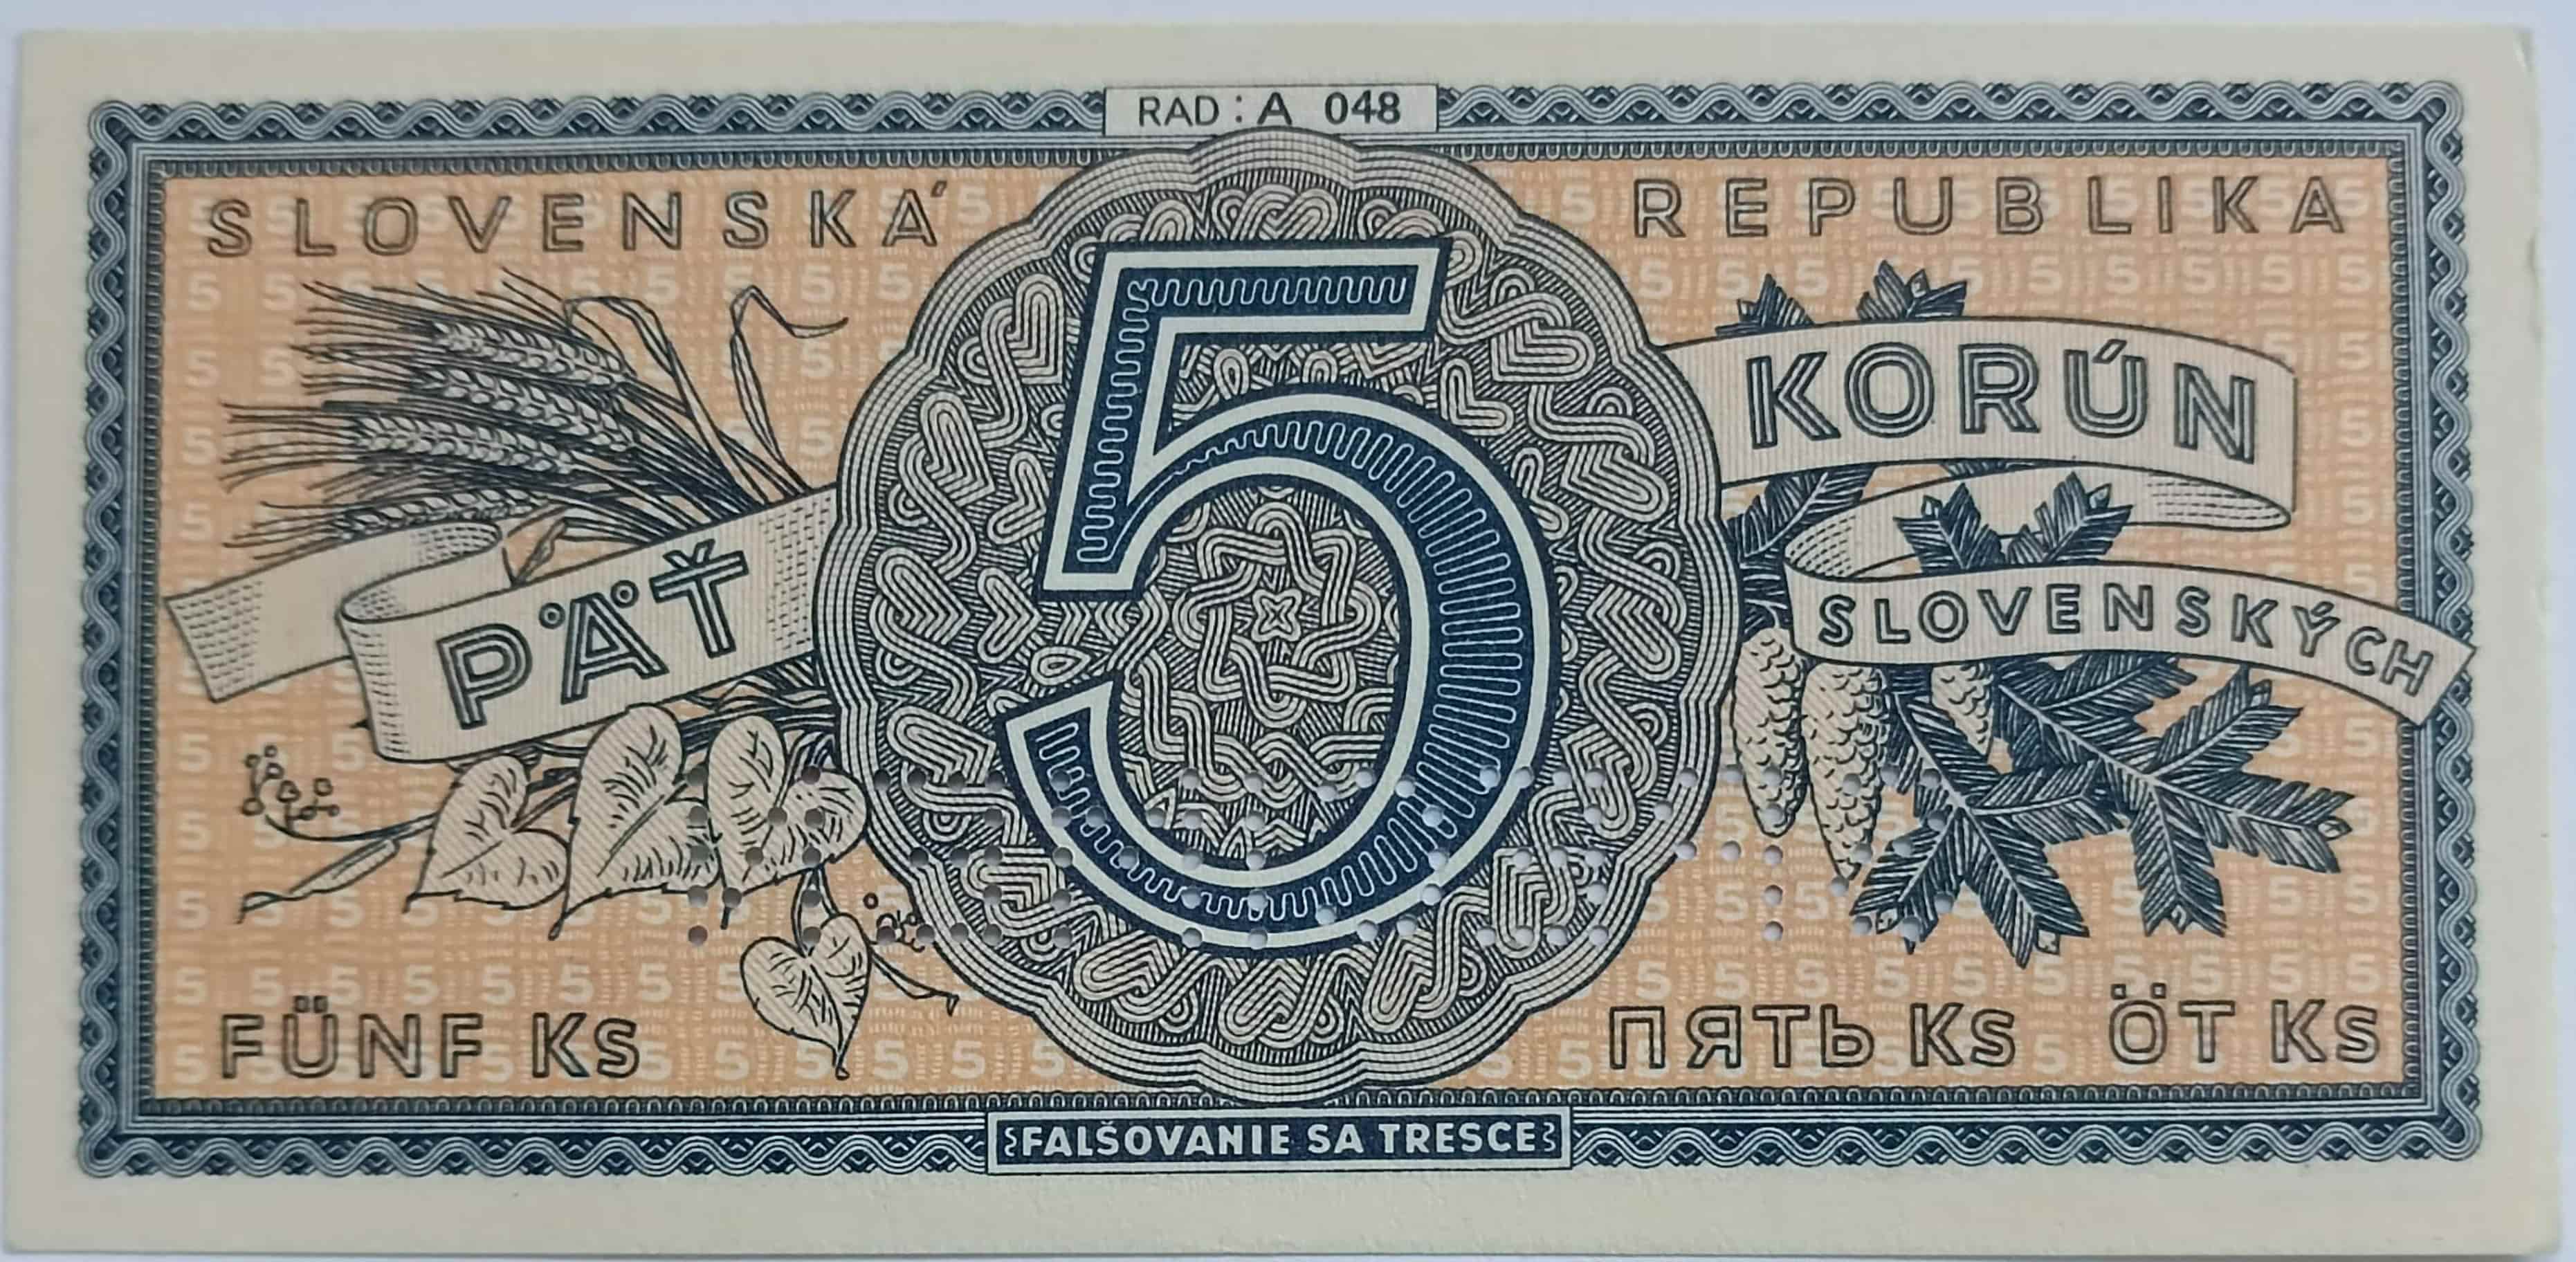 5Ks 1945 A048